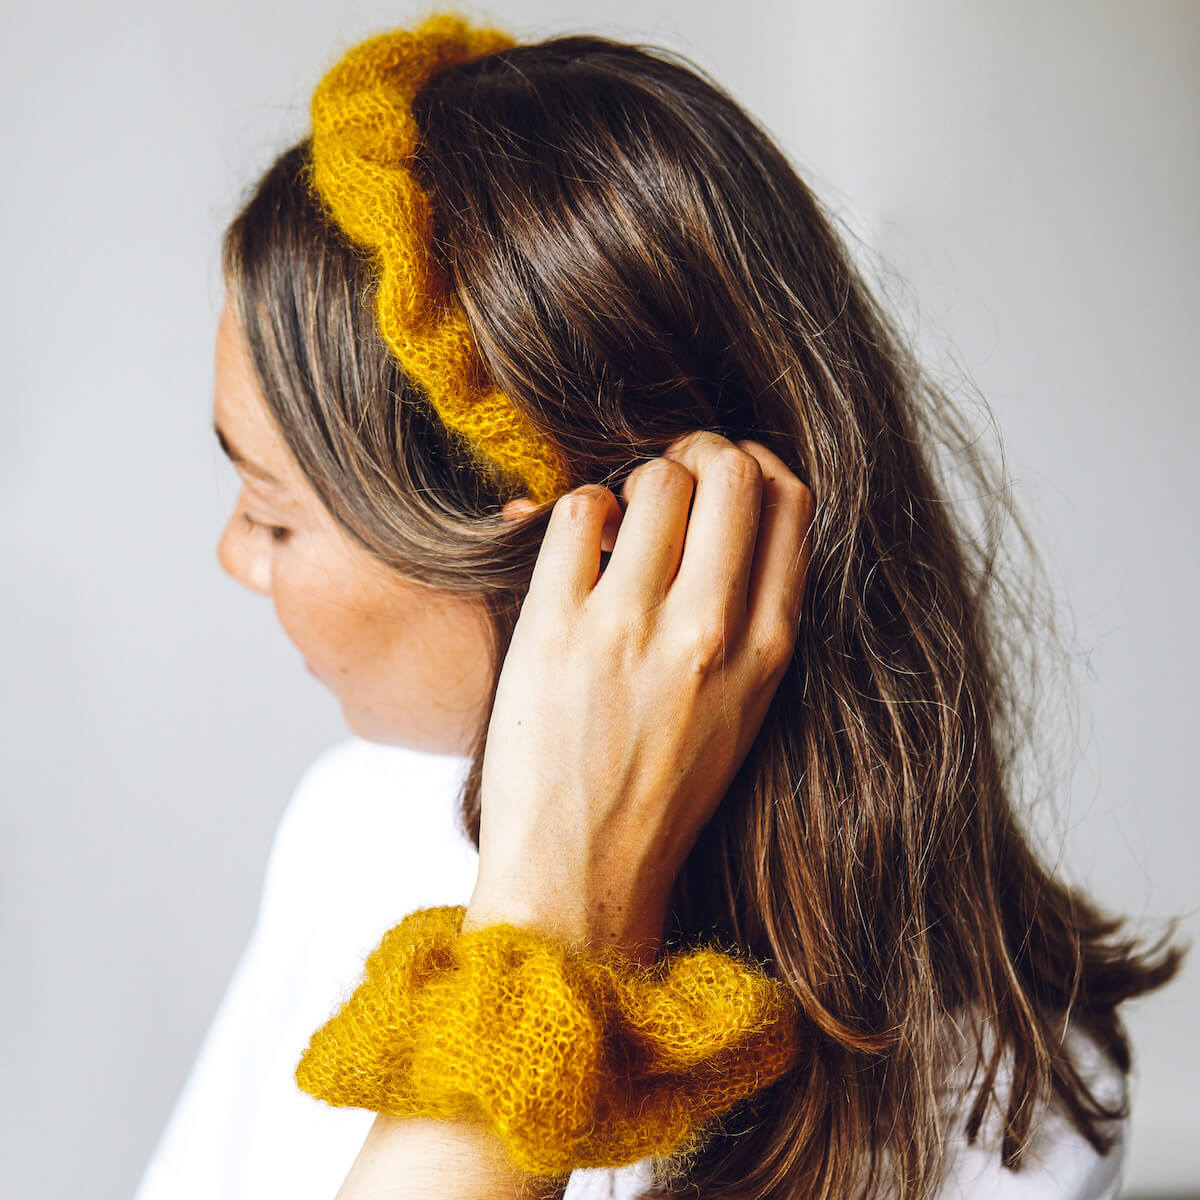 Mustard headband and scrunchie